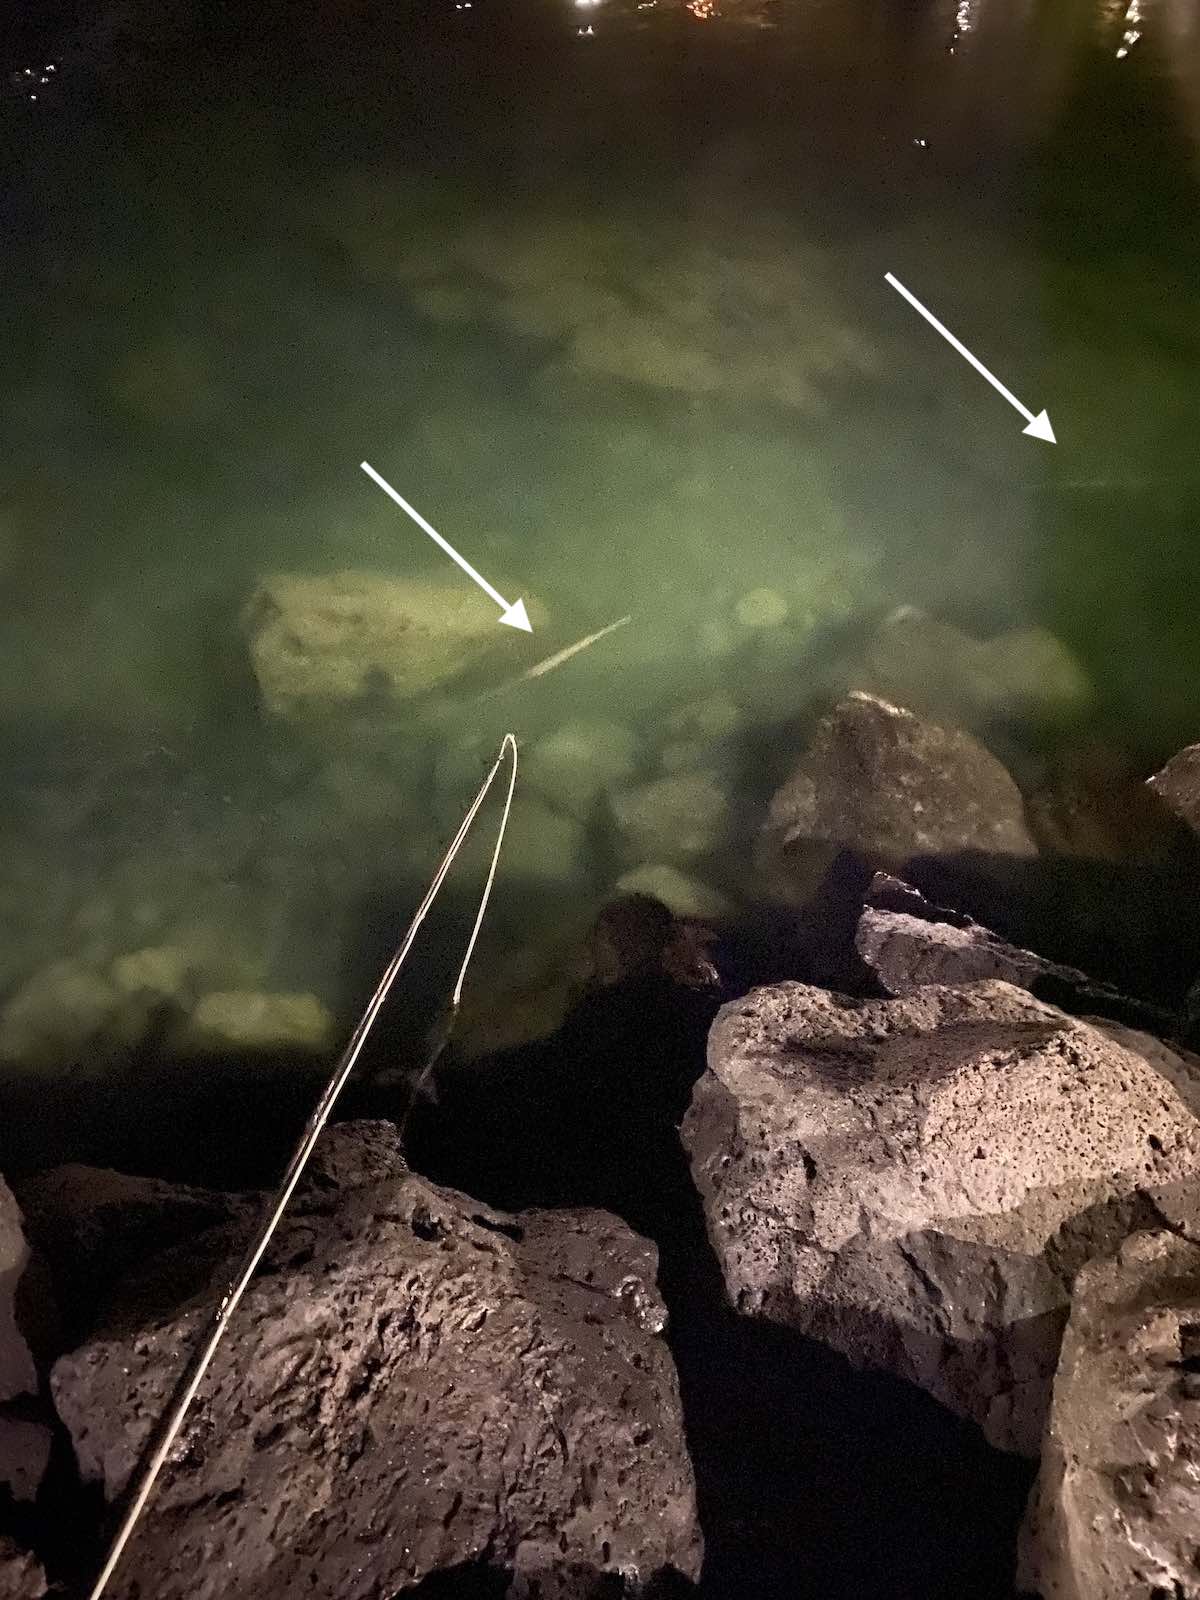 Stalking cornetfish at night in shallow water